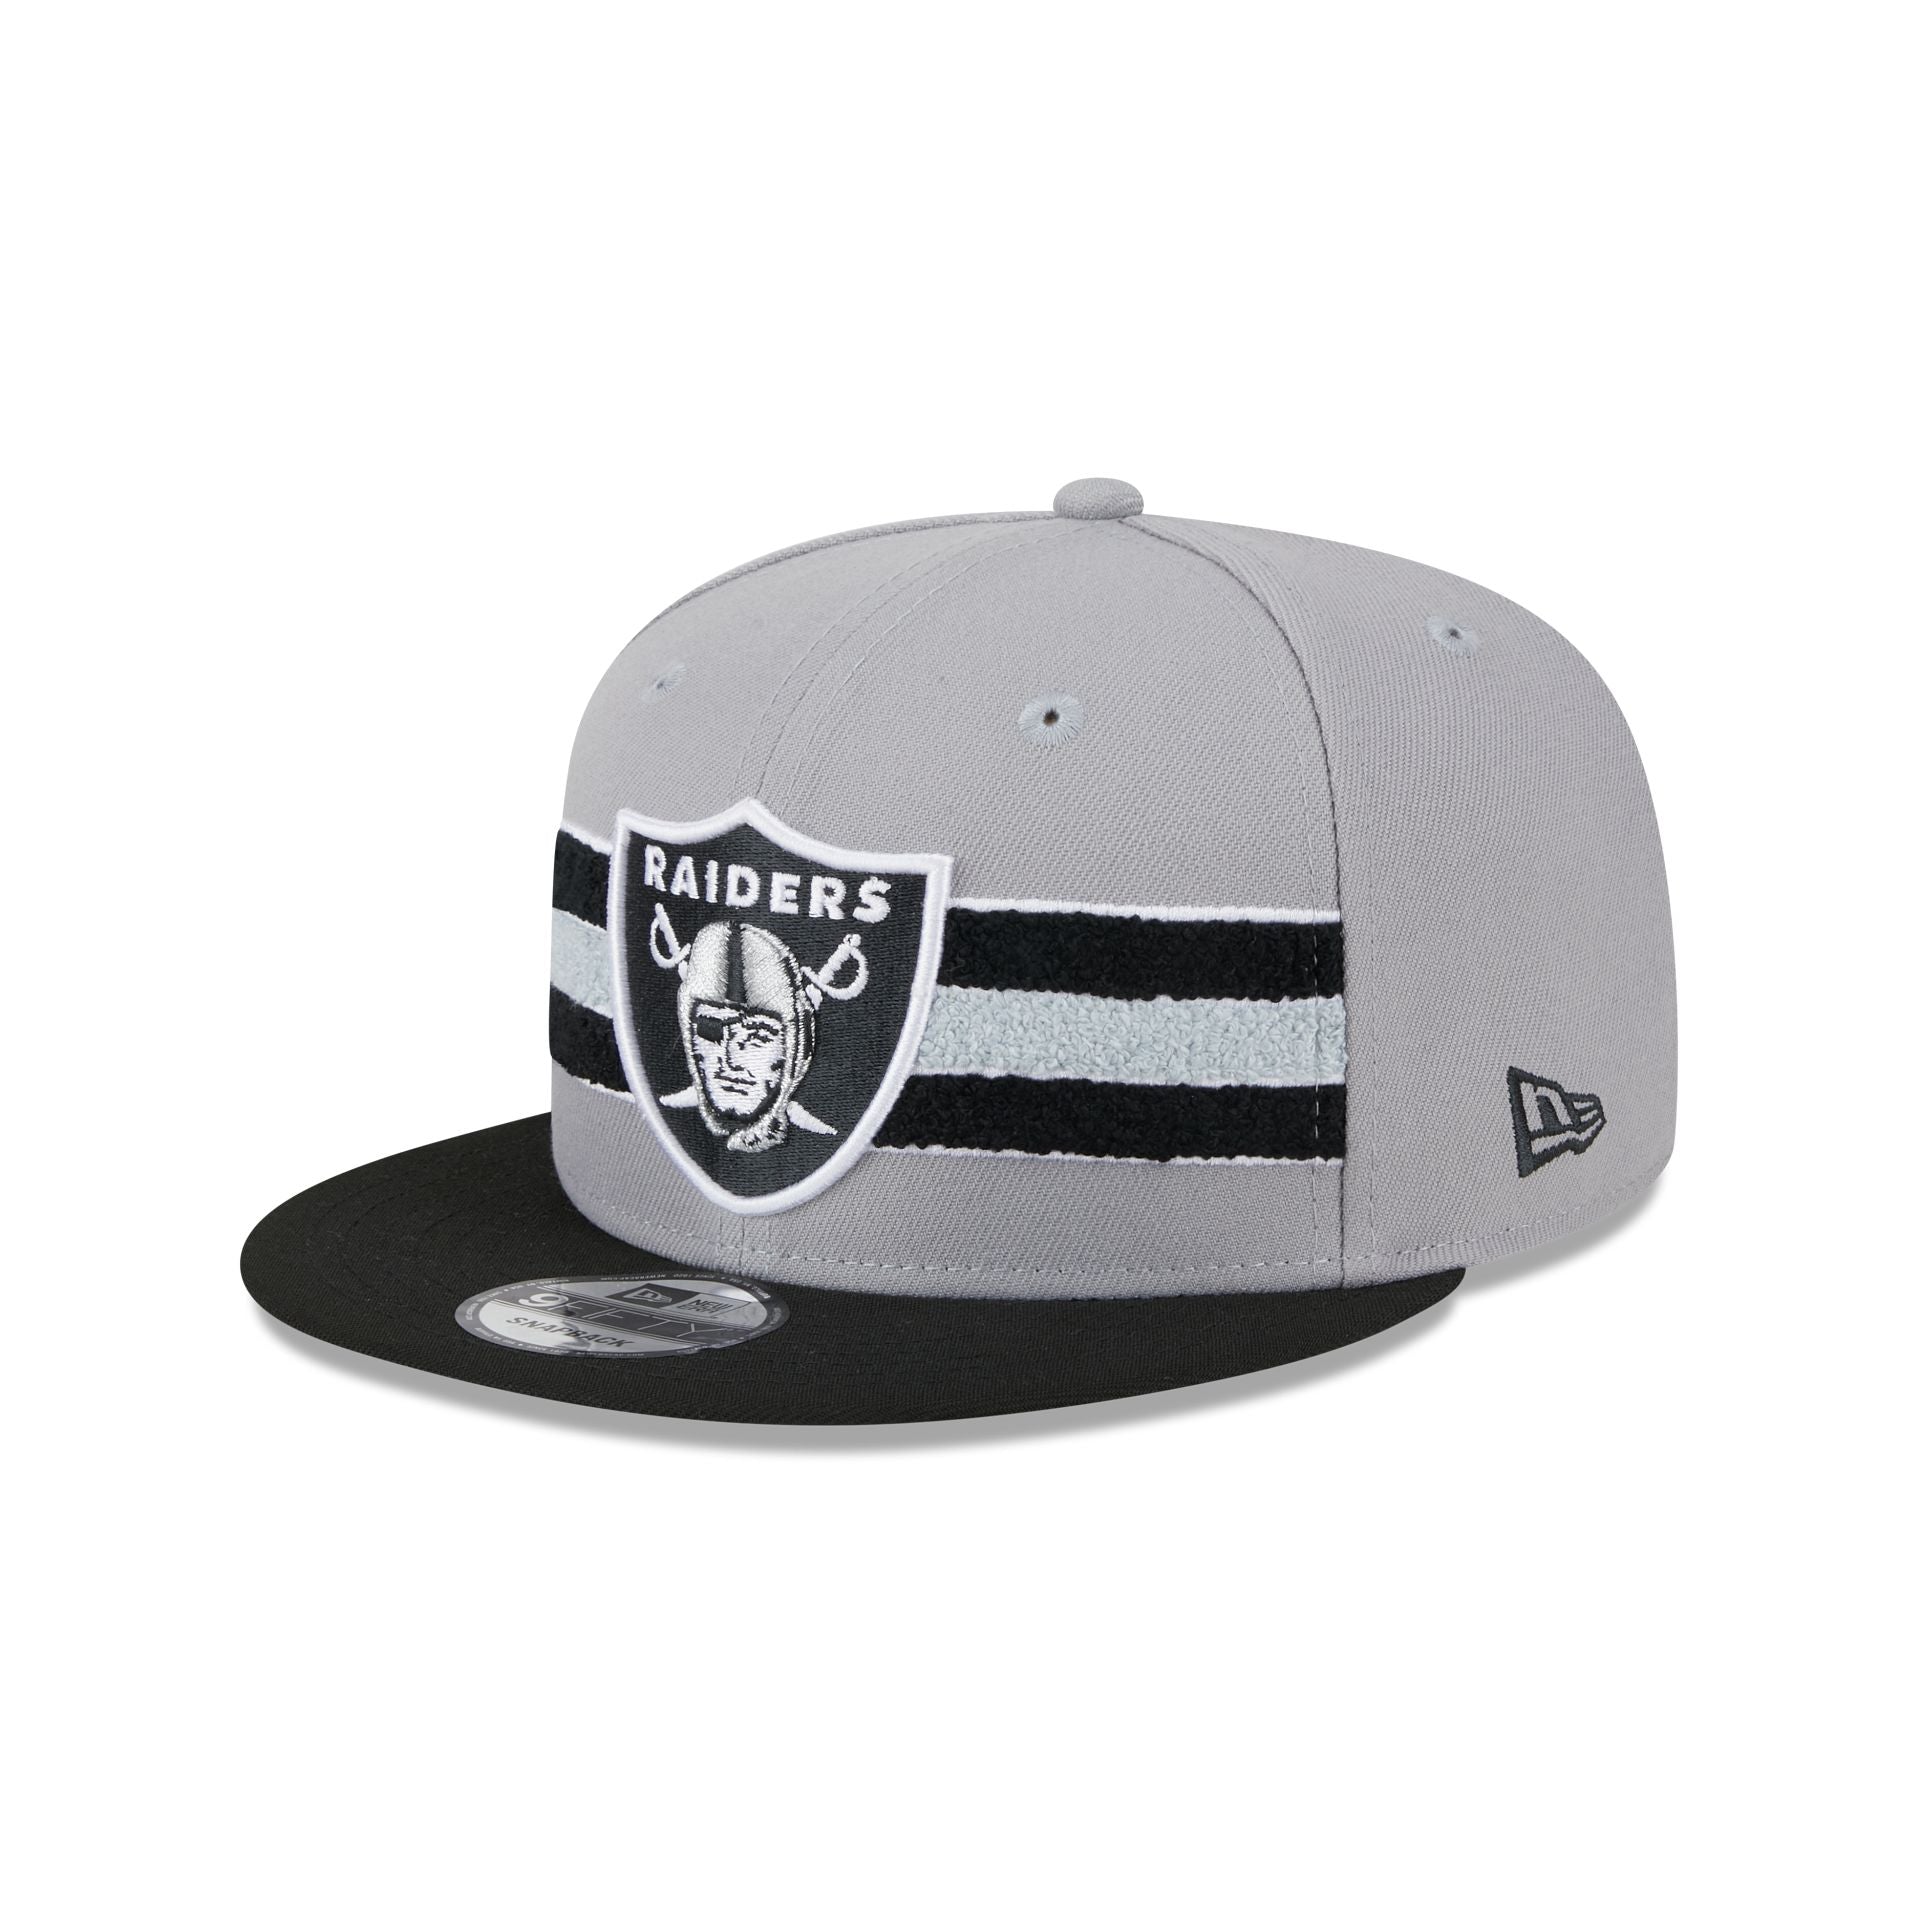 New Era 9FIFTY Las Vegas Raiders Snapback Hat